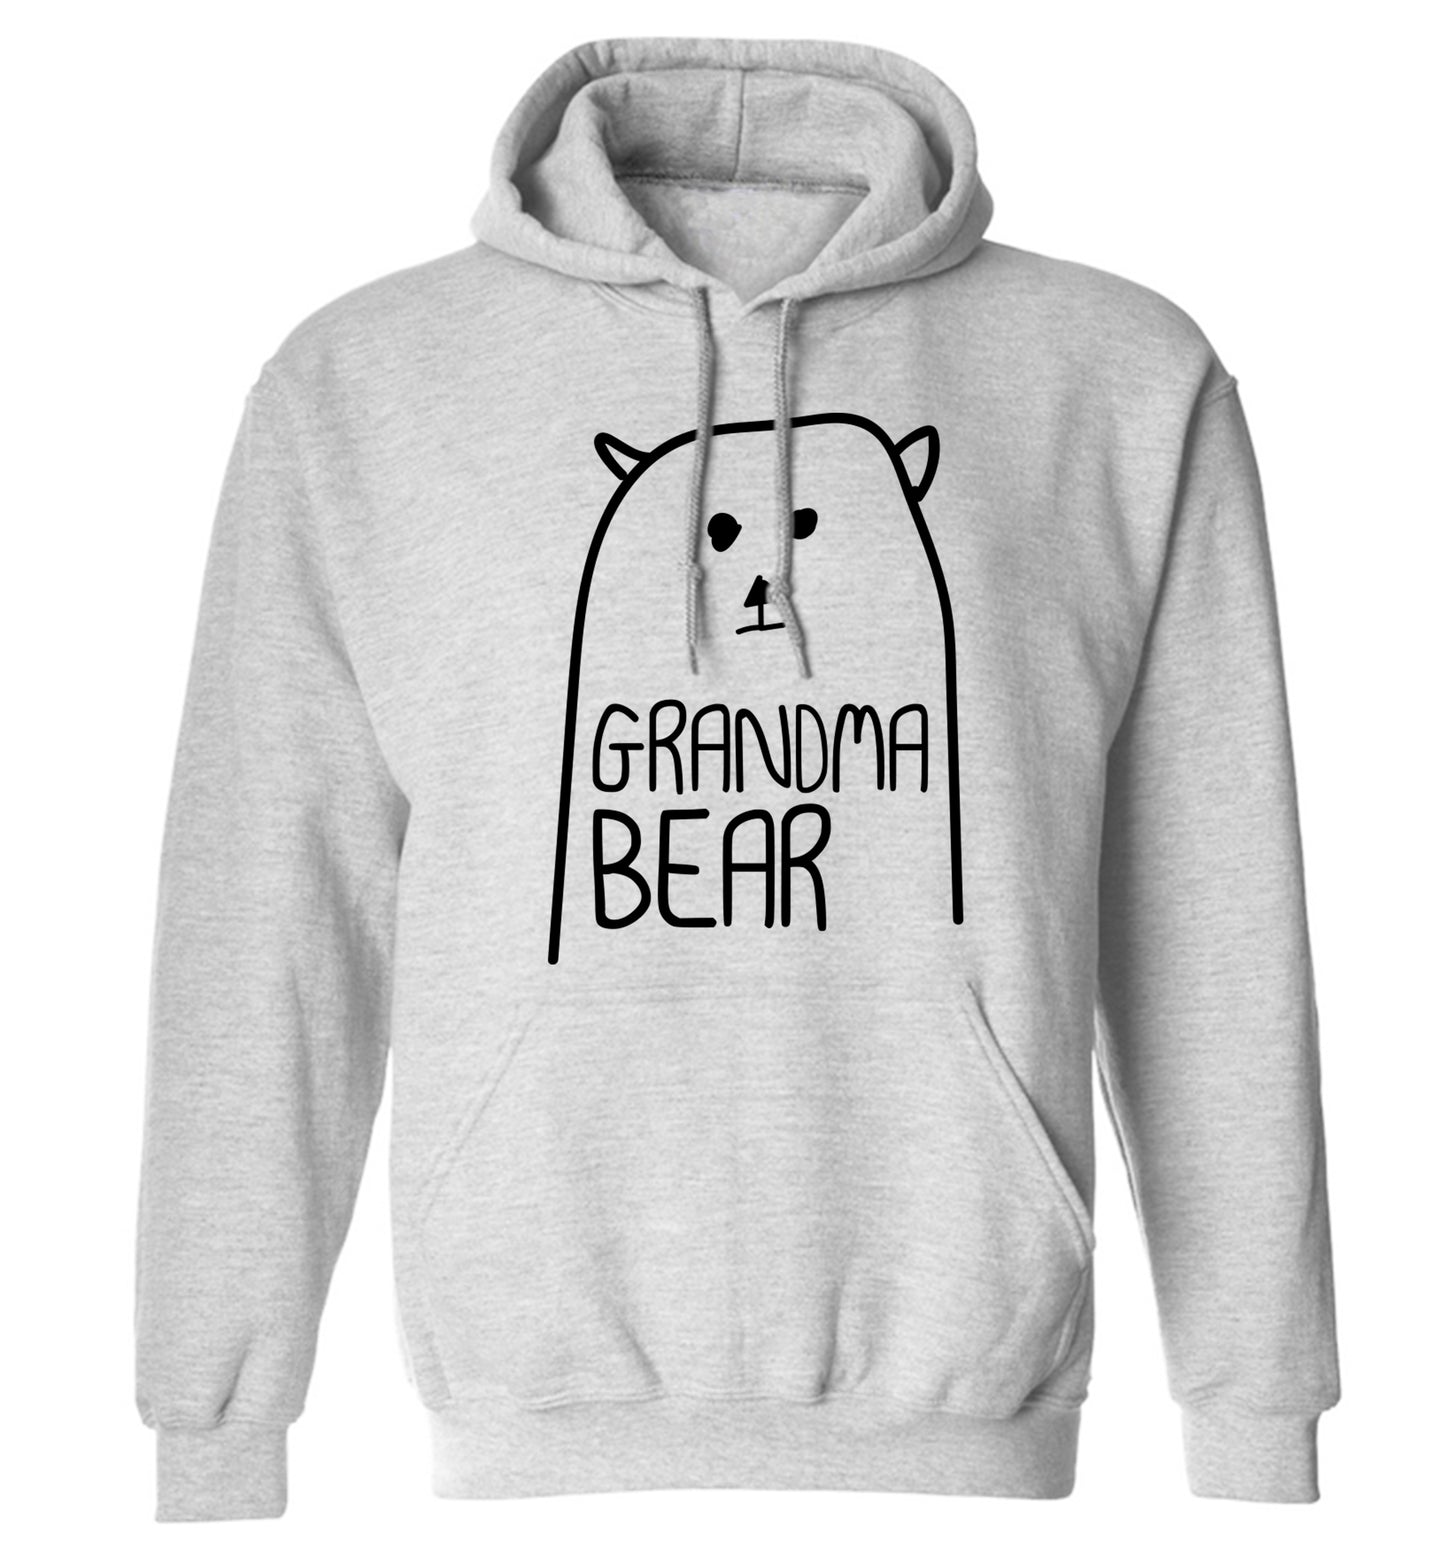 Grandma bear adults unisex grey hoodie 2XL